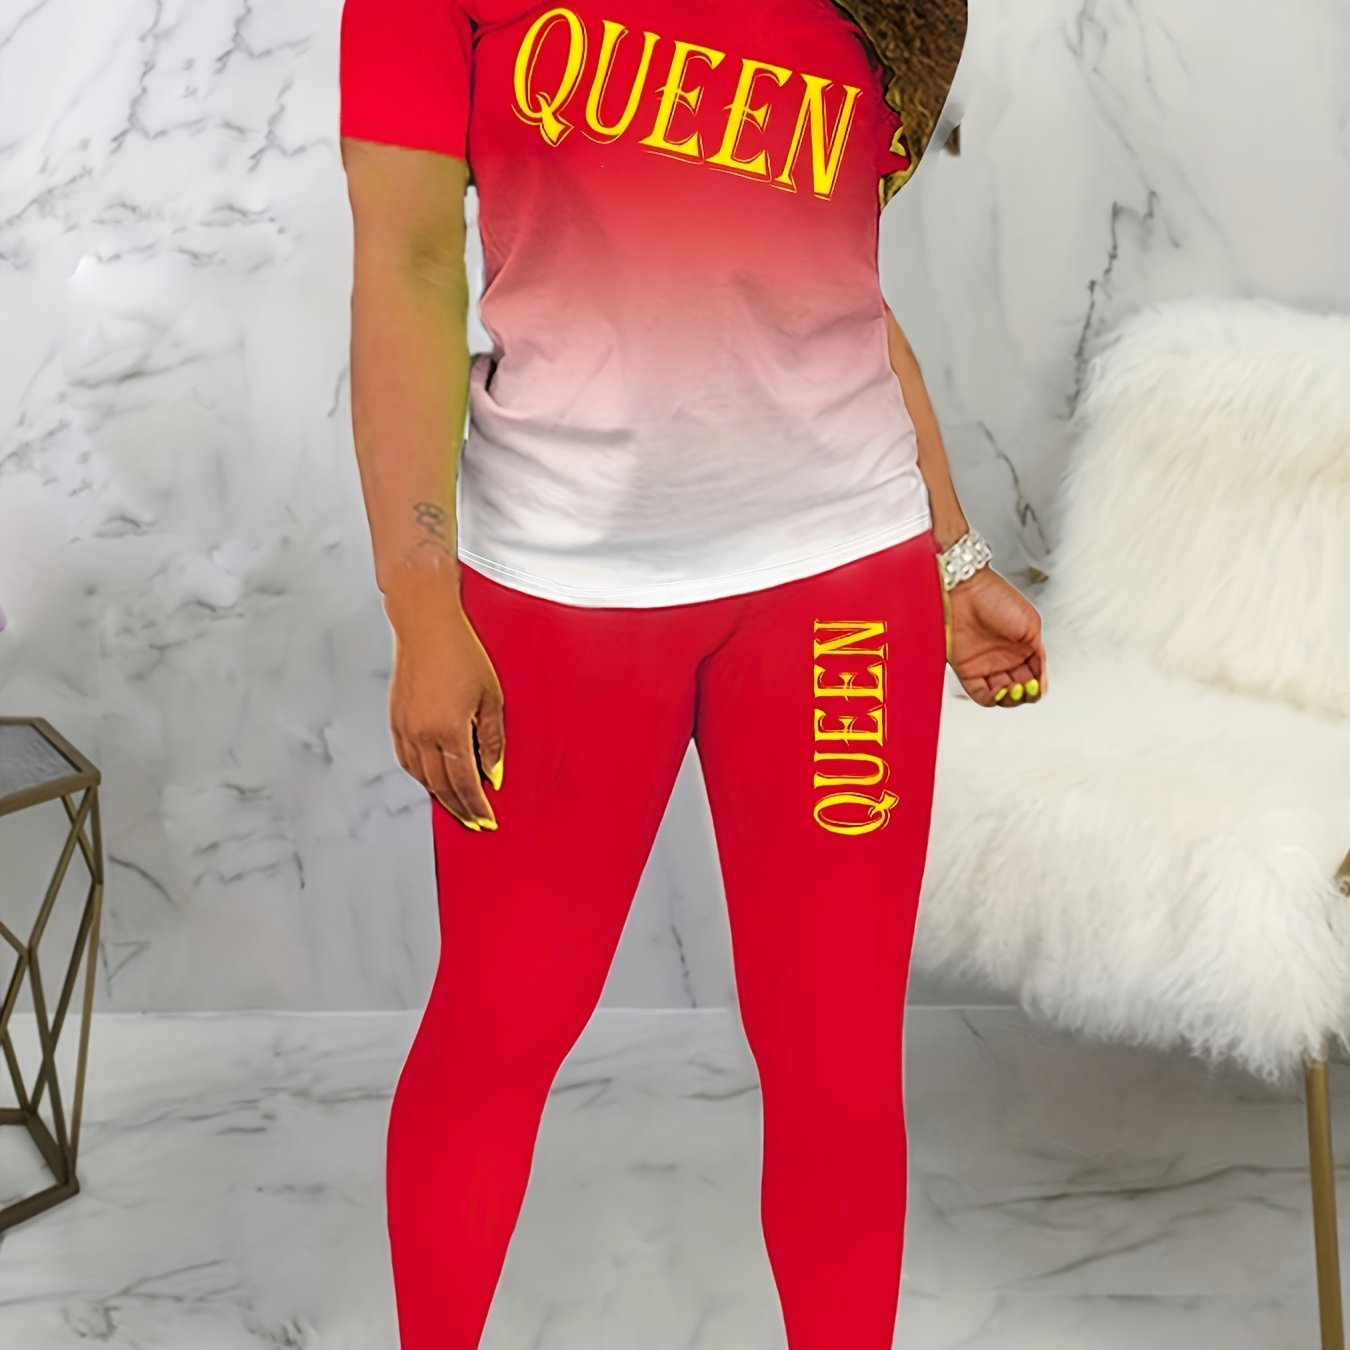 Queen Leggings Sets - Red